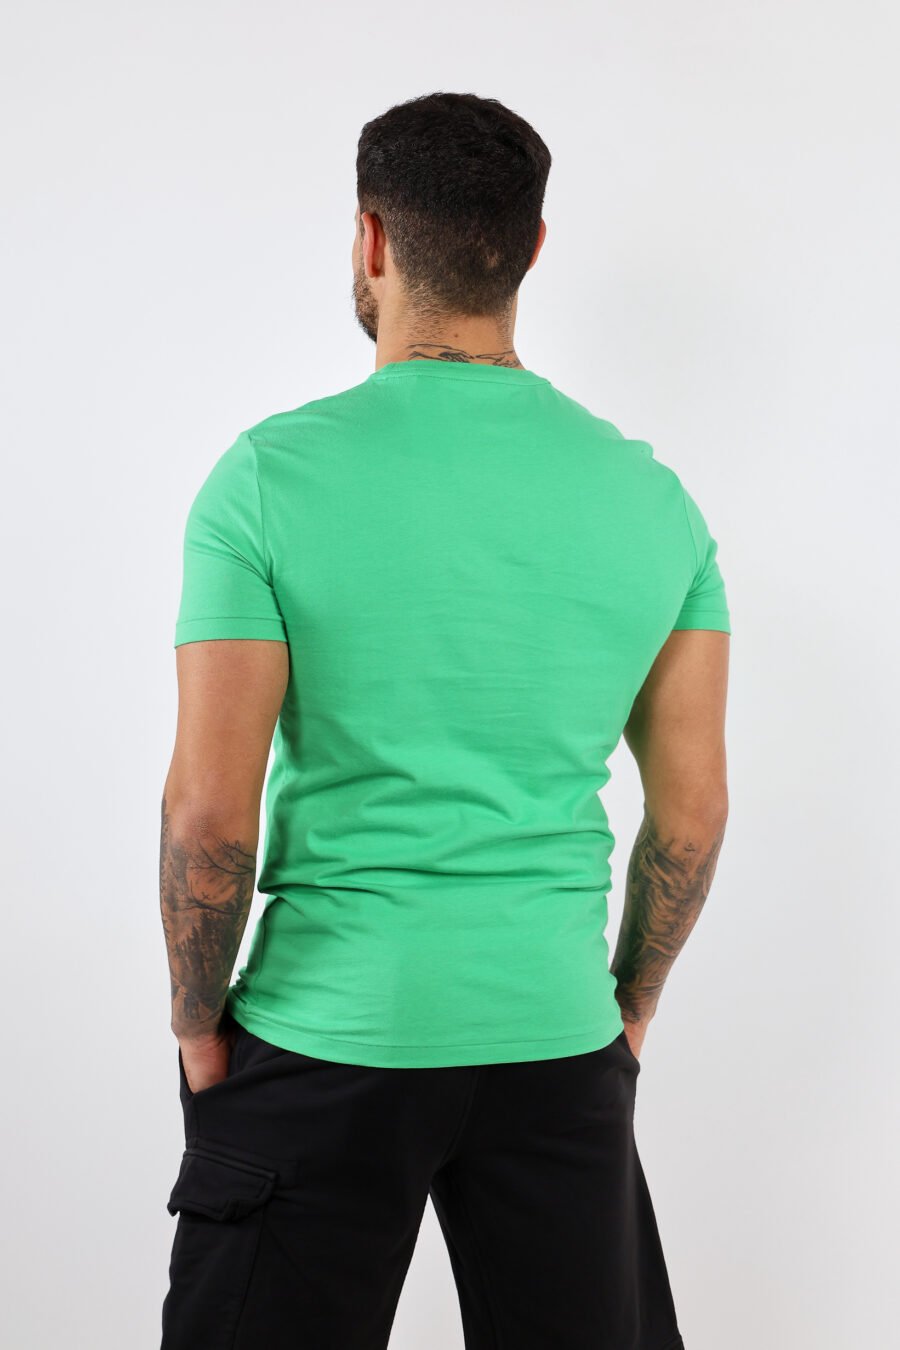 Grünes und gelbes T-Shirt mit Mini-Logo "Polo" - BLS Fashion 305